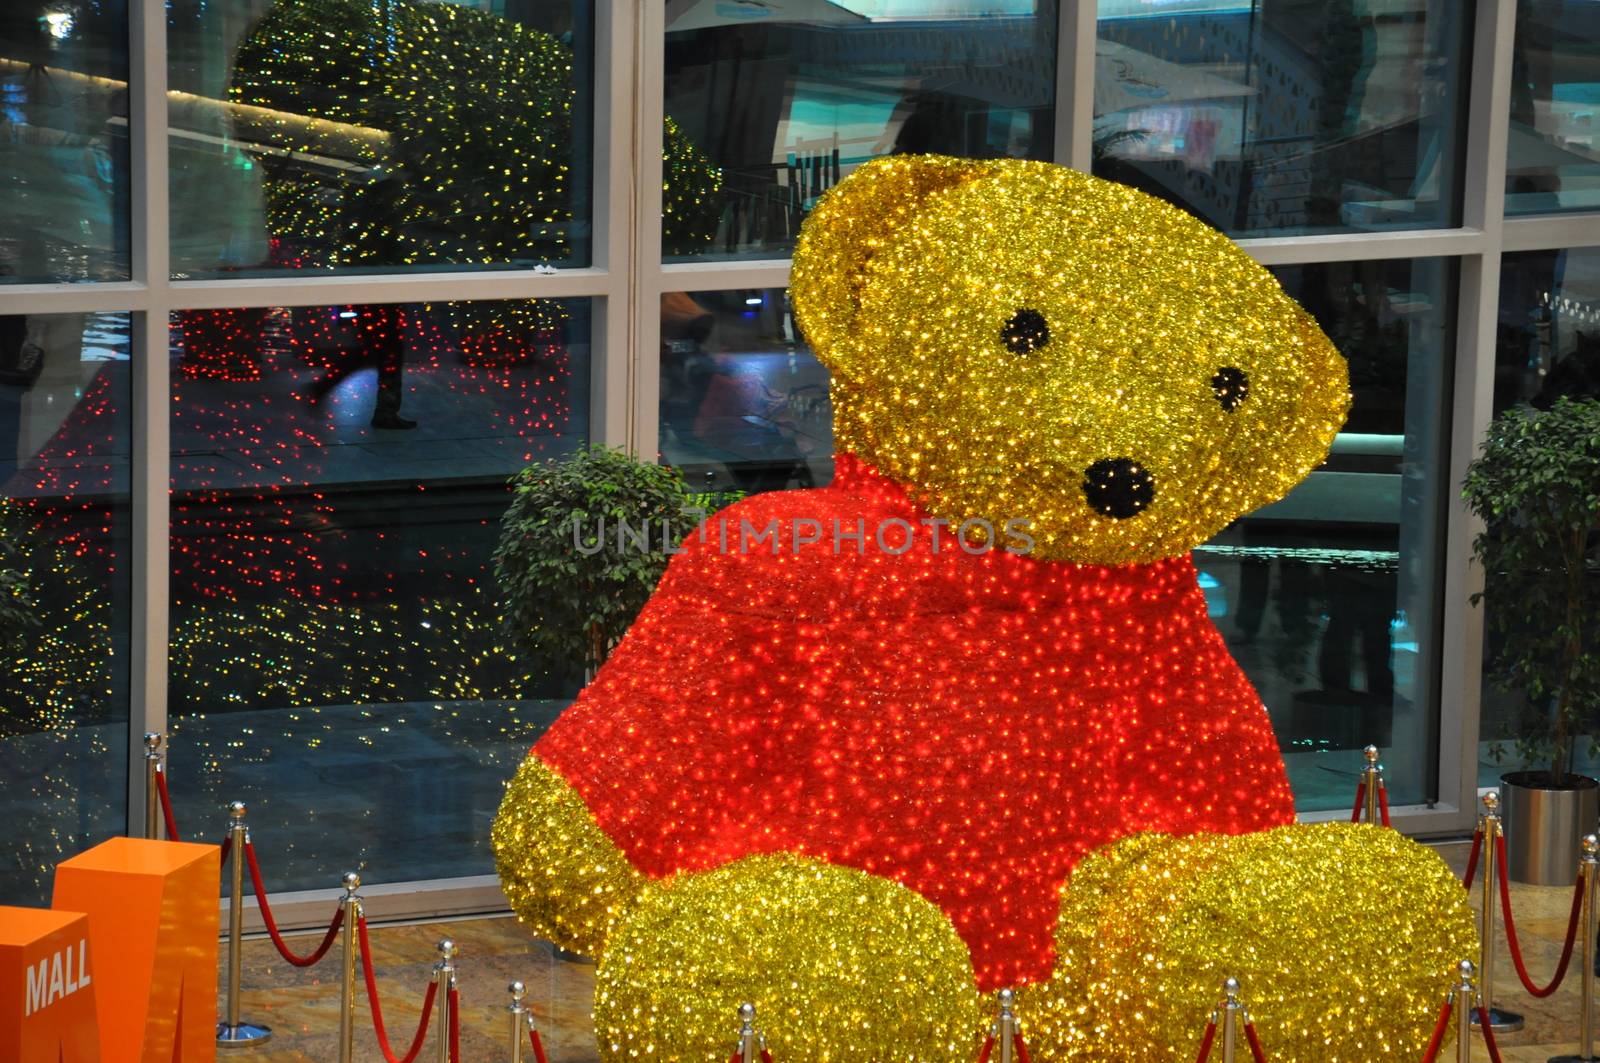 Teddy Bear at Festival Centre Mall in Dubai, UAE by sainaniritu